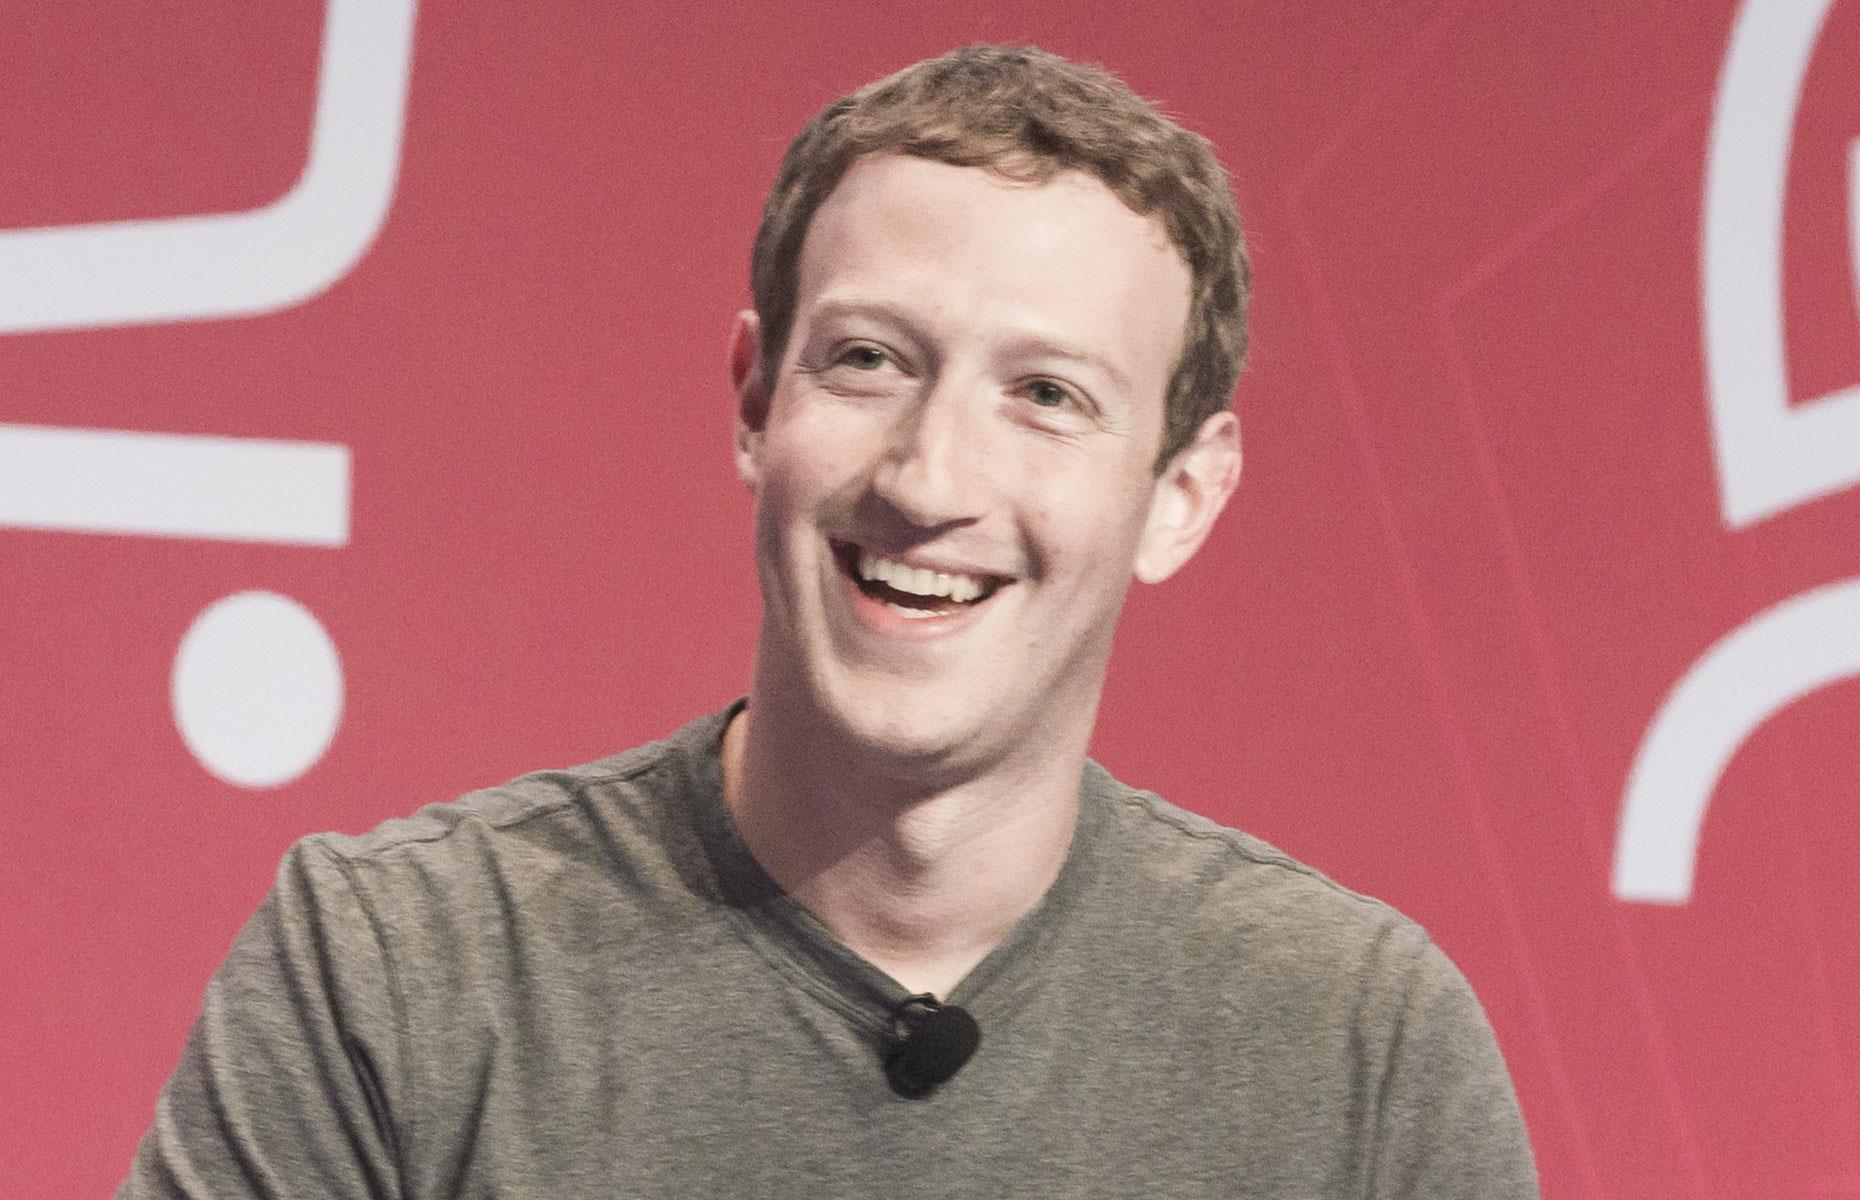 Mark Zuckerberg – Set yourself new goals